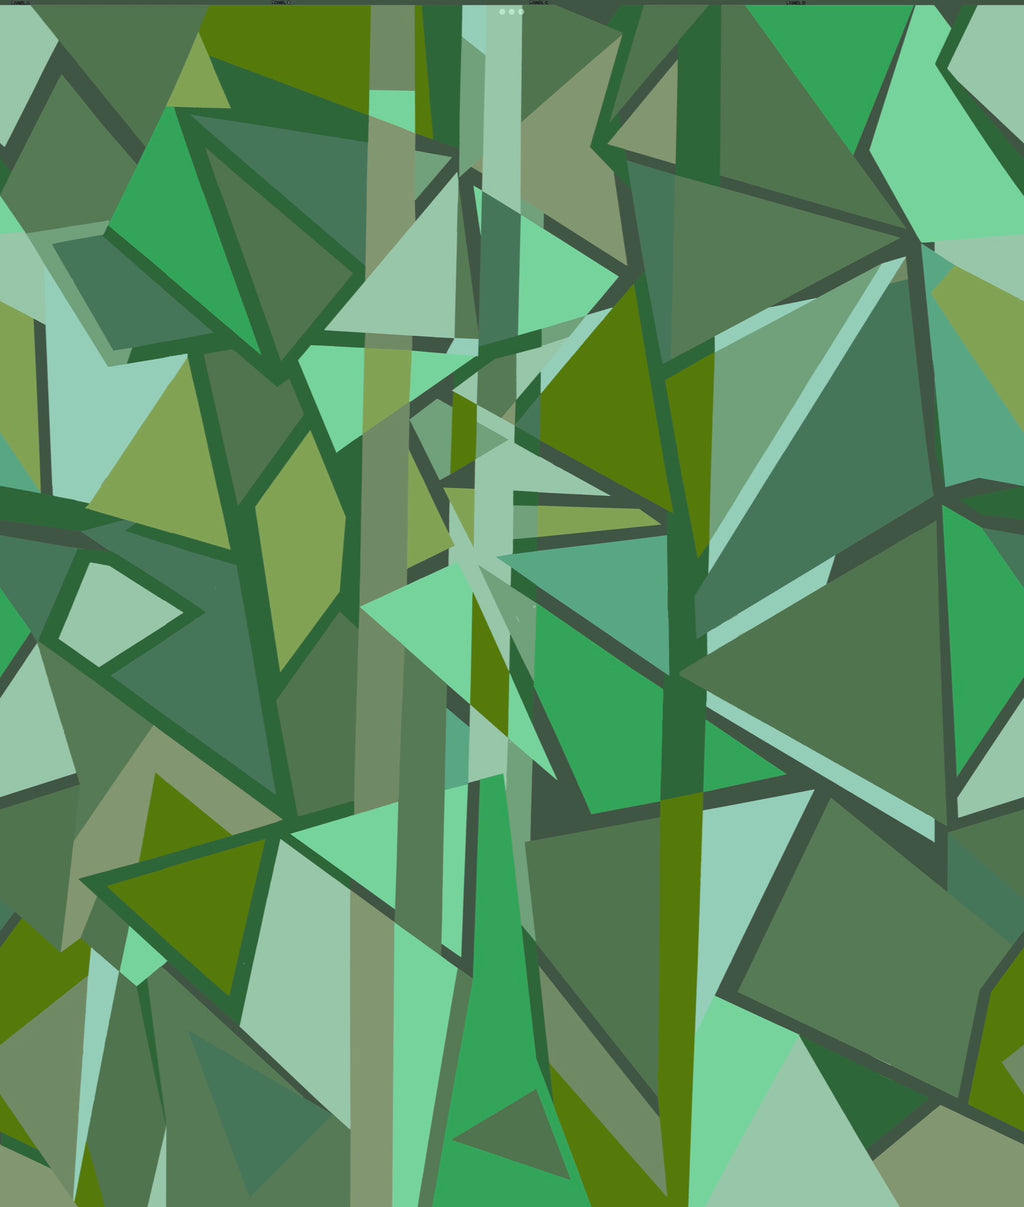 4 panel Geometric mural Wallpaper - Olive